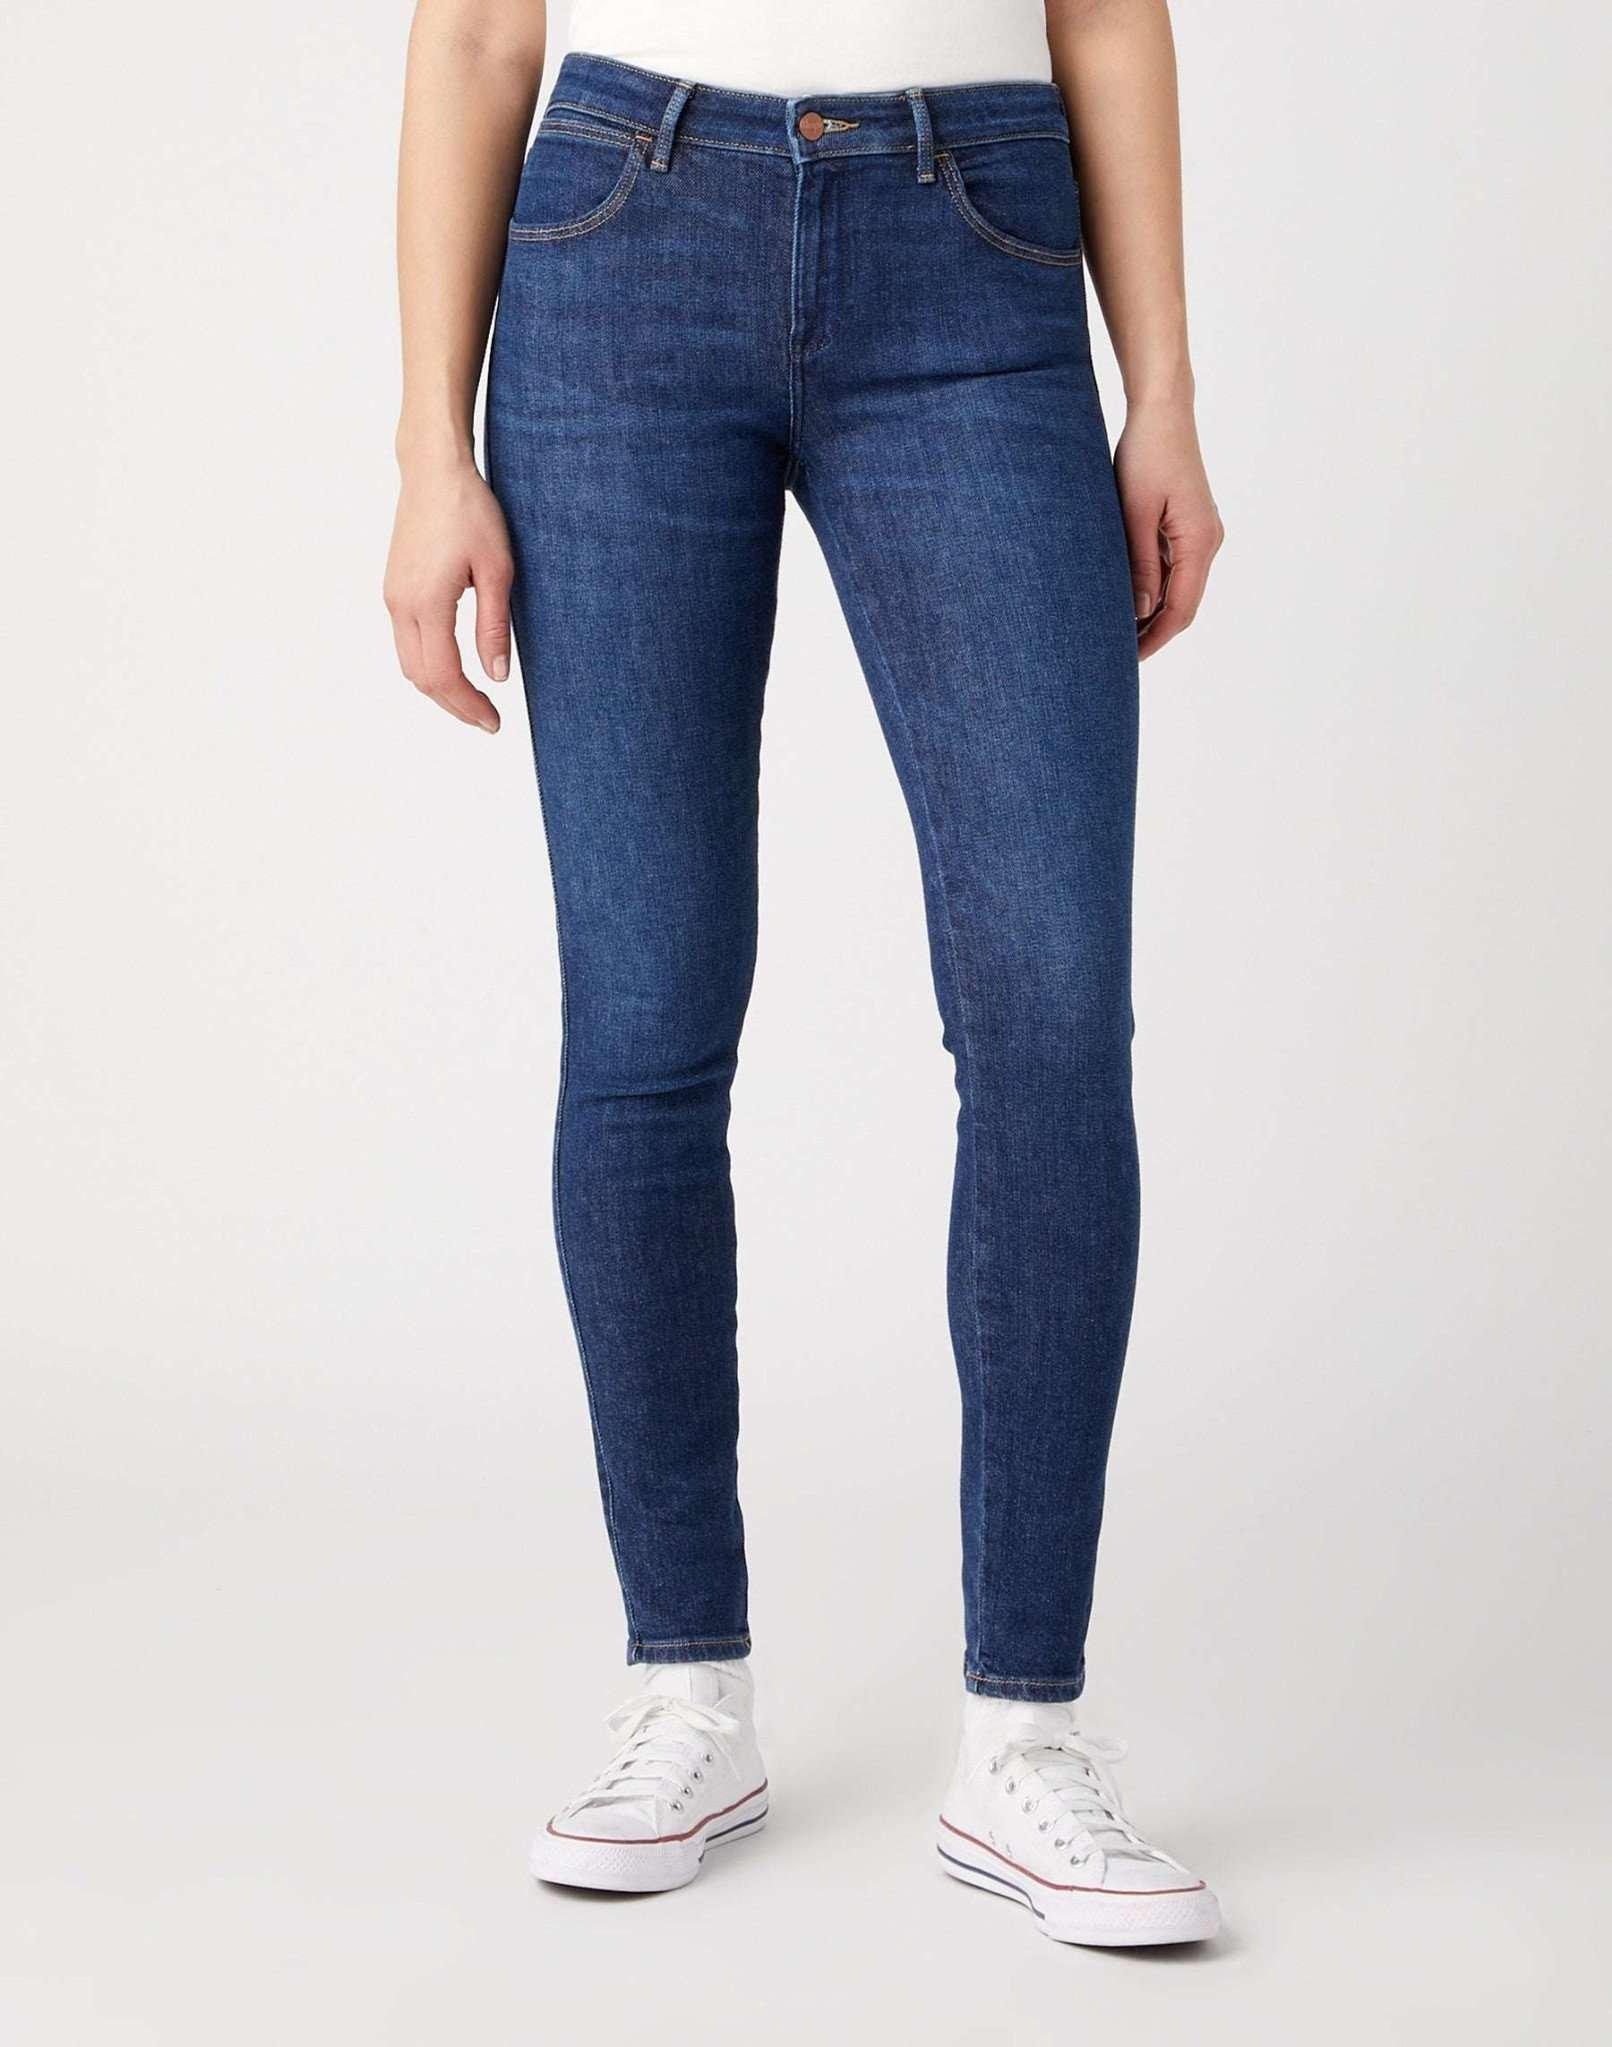 Jeans Skinny Fit Skinny Damen Blau L32/W27 von Wrangler